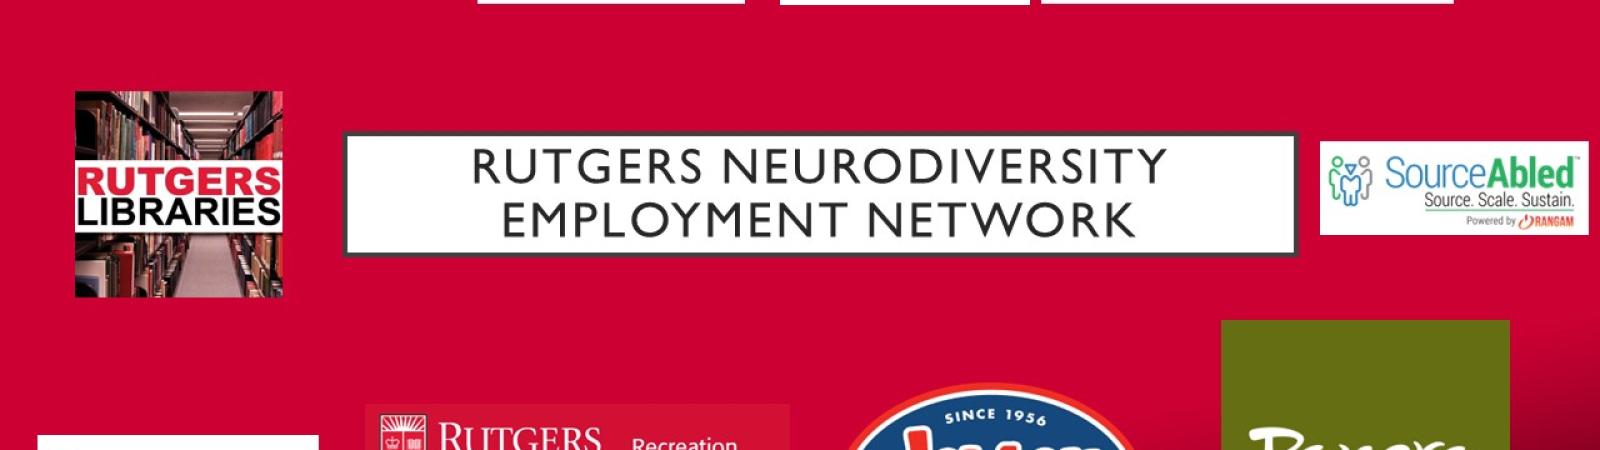 rutgers_neurodiversity_employment_network